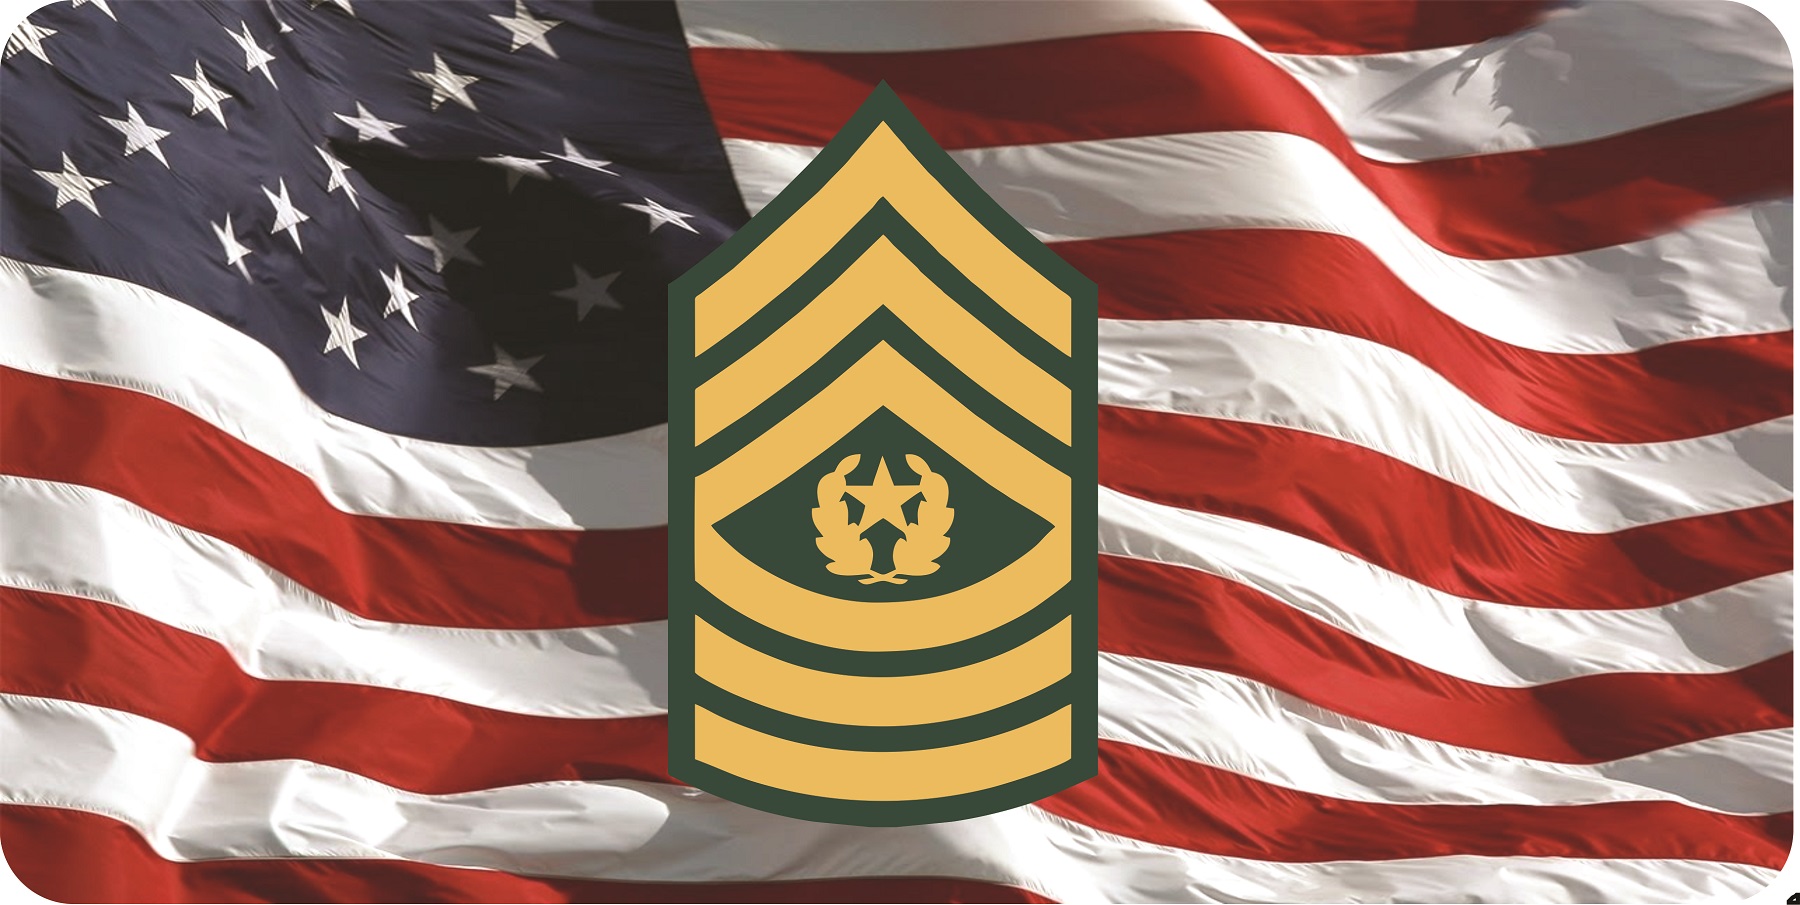 U.S. Army Command Sergeant Major On U.S. FLAG Photo License Plate